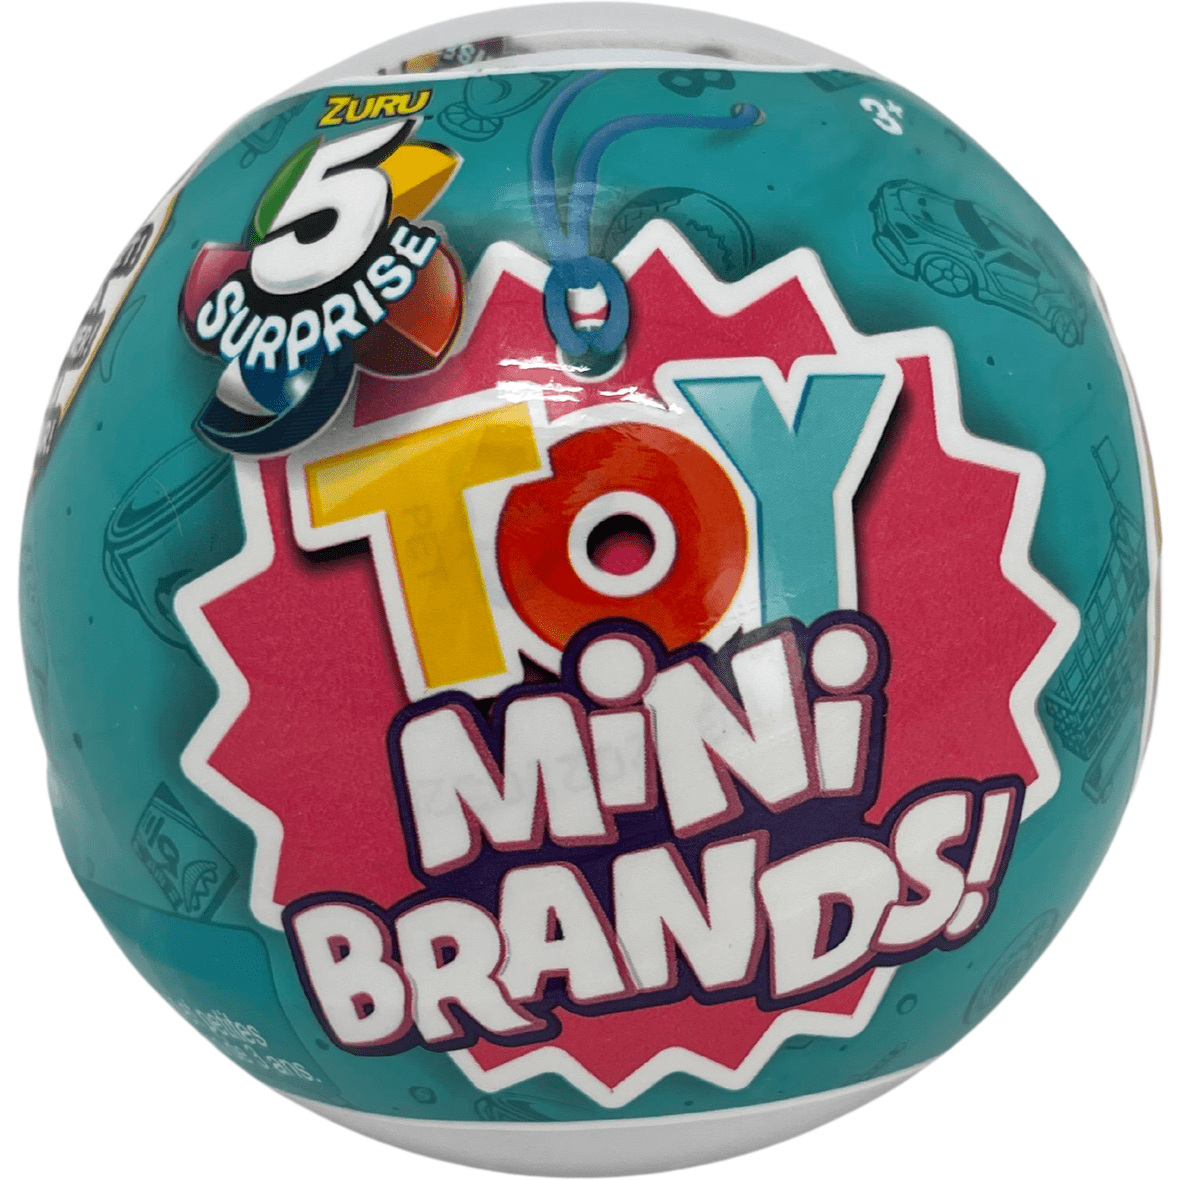 Zuru Mini Brands Surprise Ball / Toy Mini Brands / 5 Surprises Inside / Mini Toys